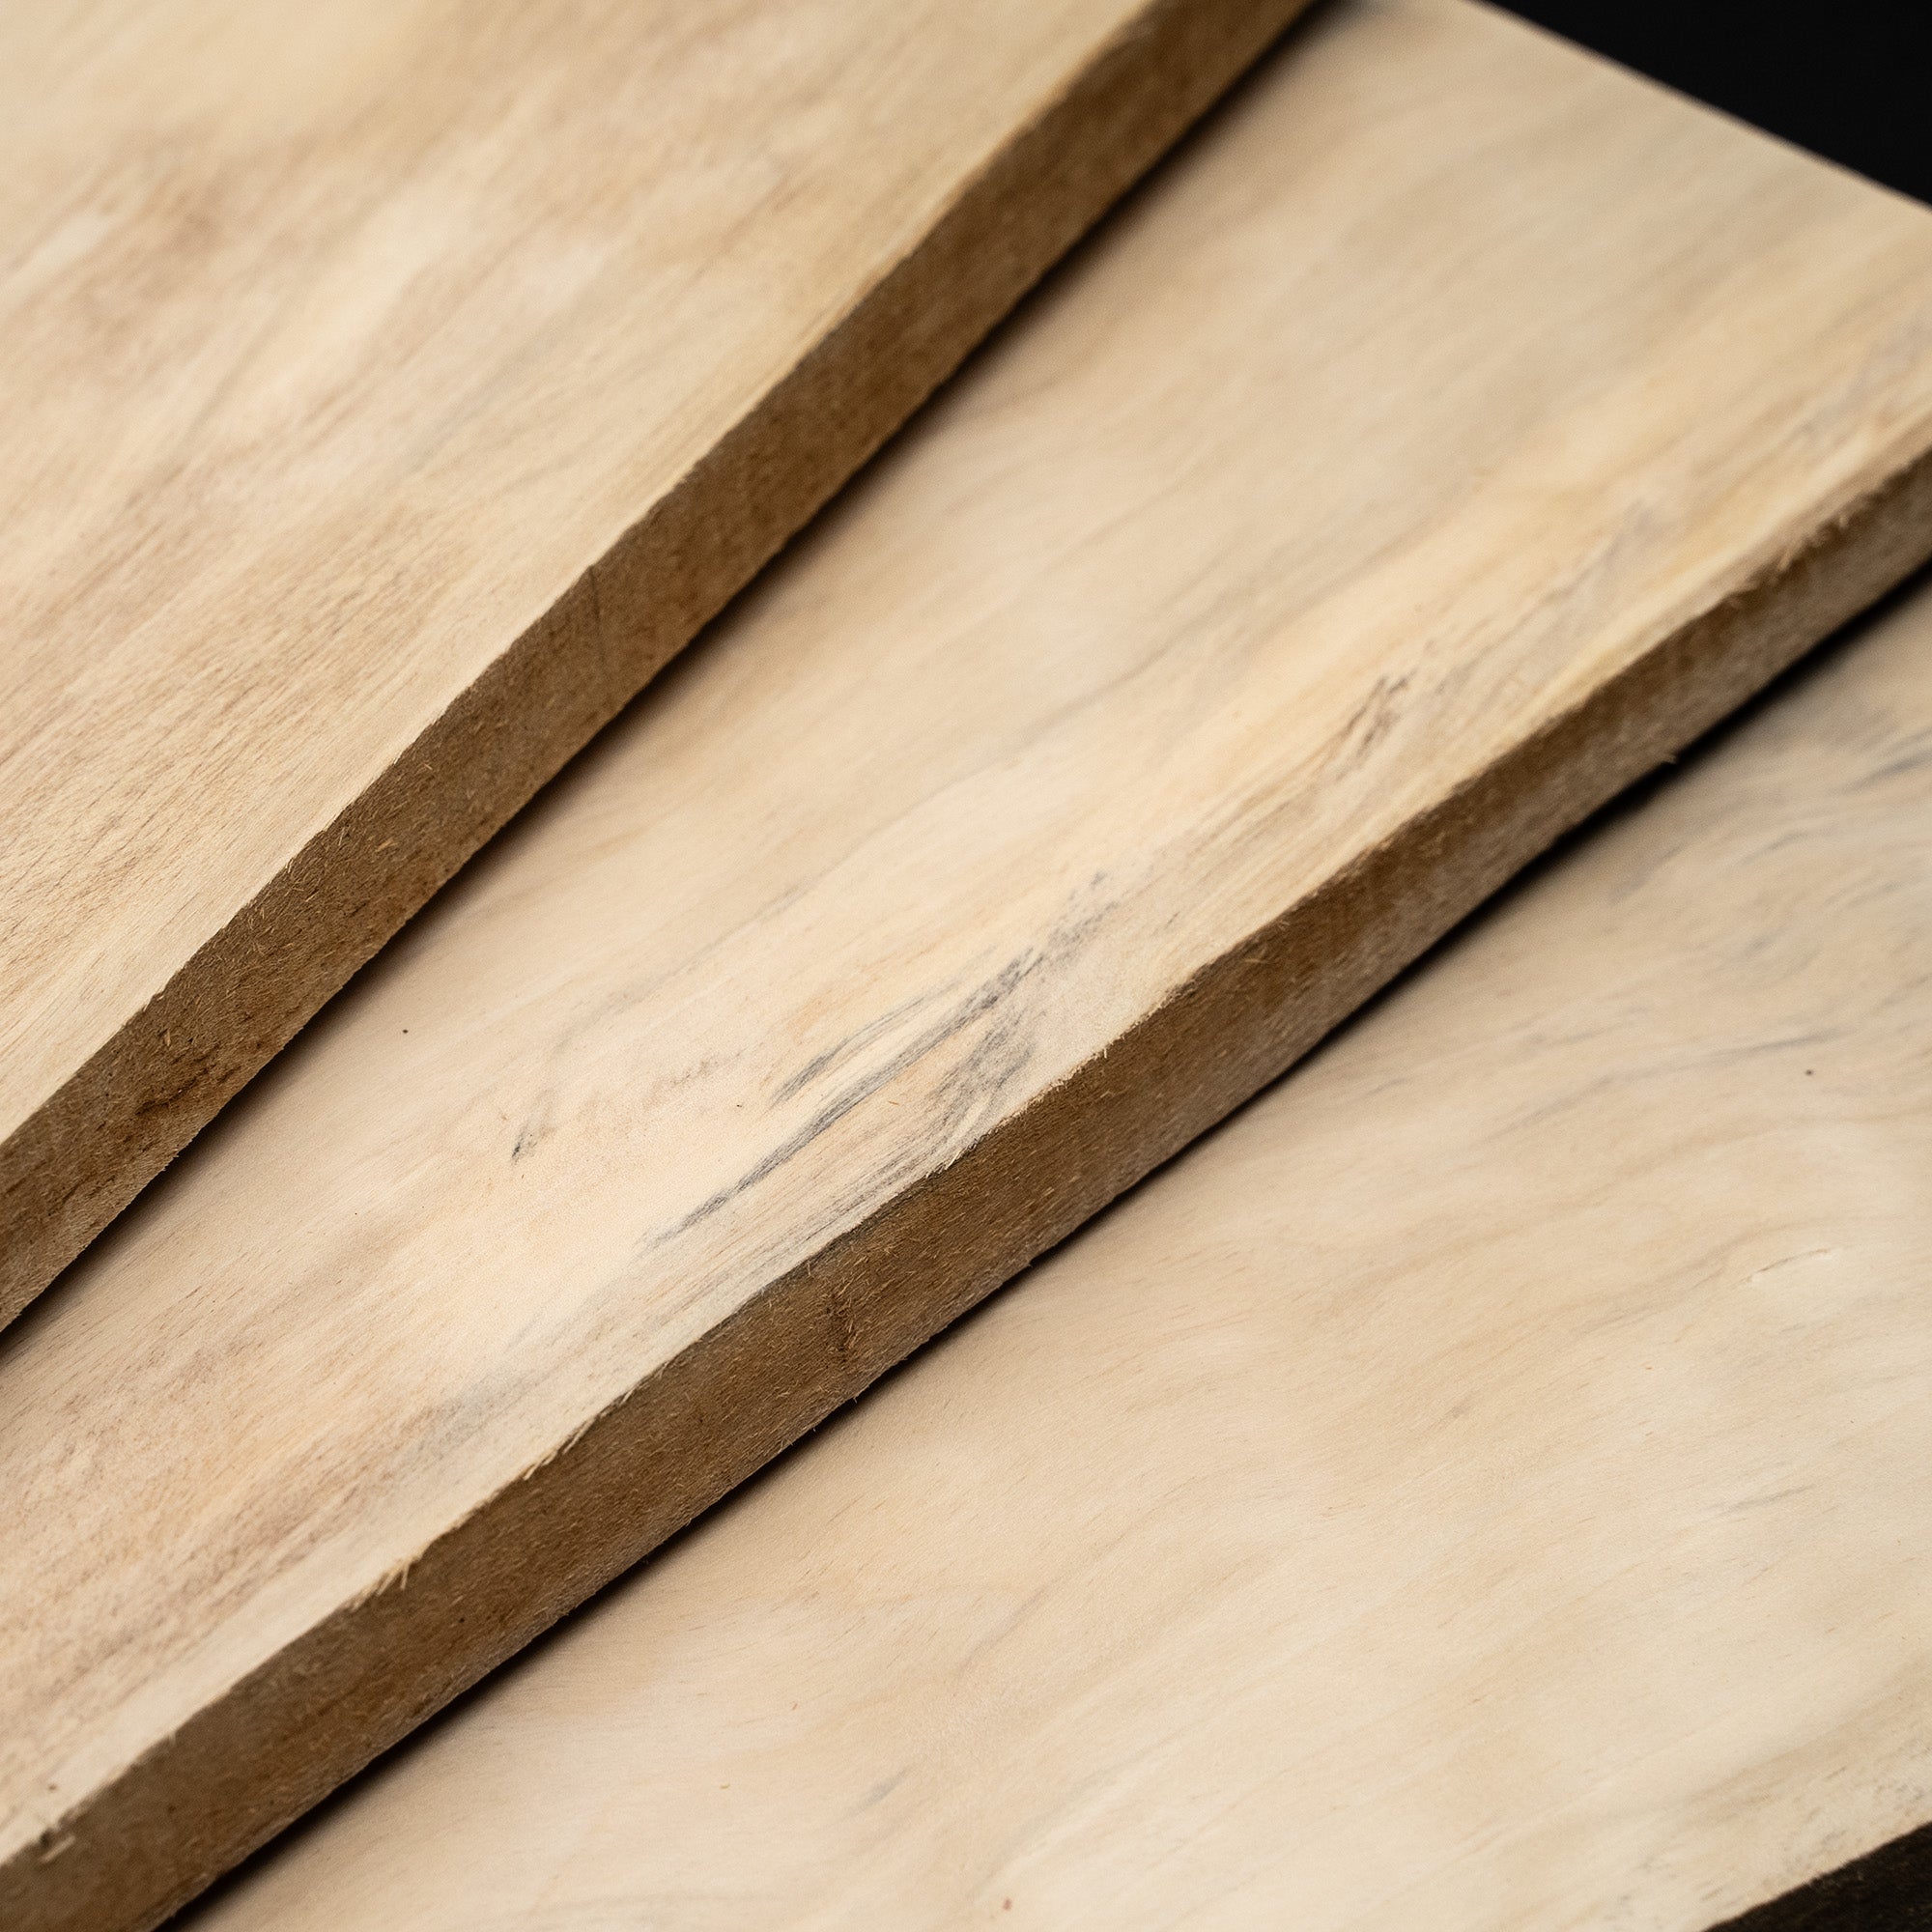 Solid Maple Wood Slat Plank 1/4 x 3 x 12 long Woodworking Kiln Dried  Sanded